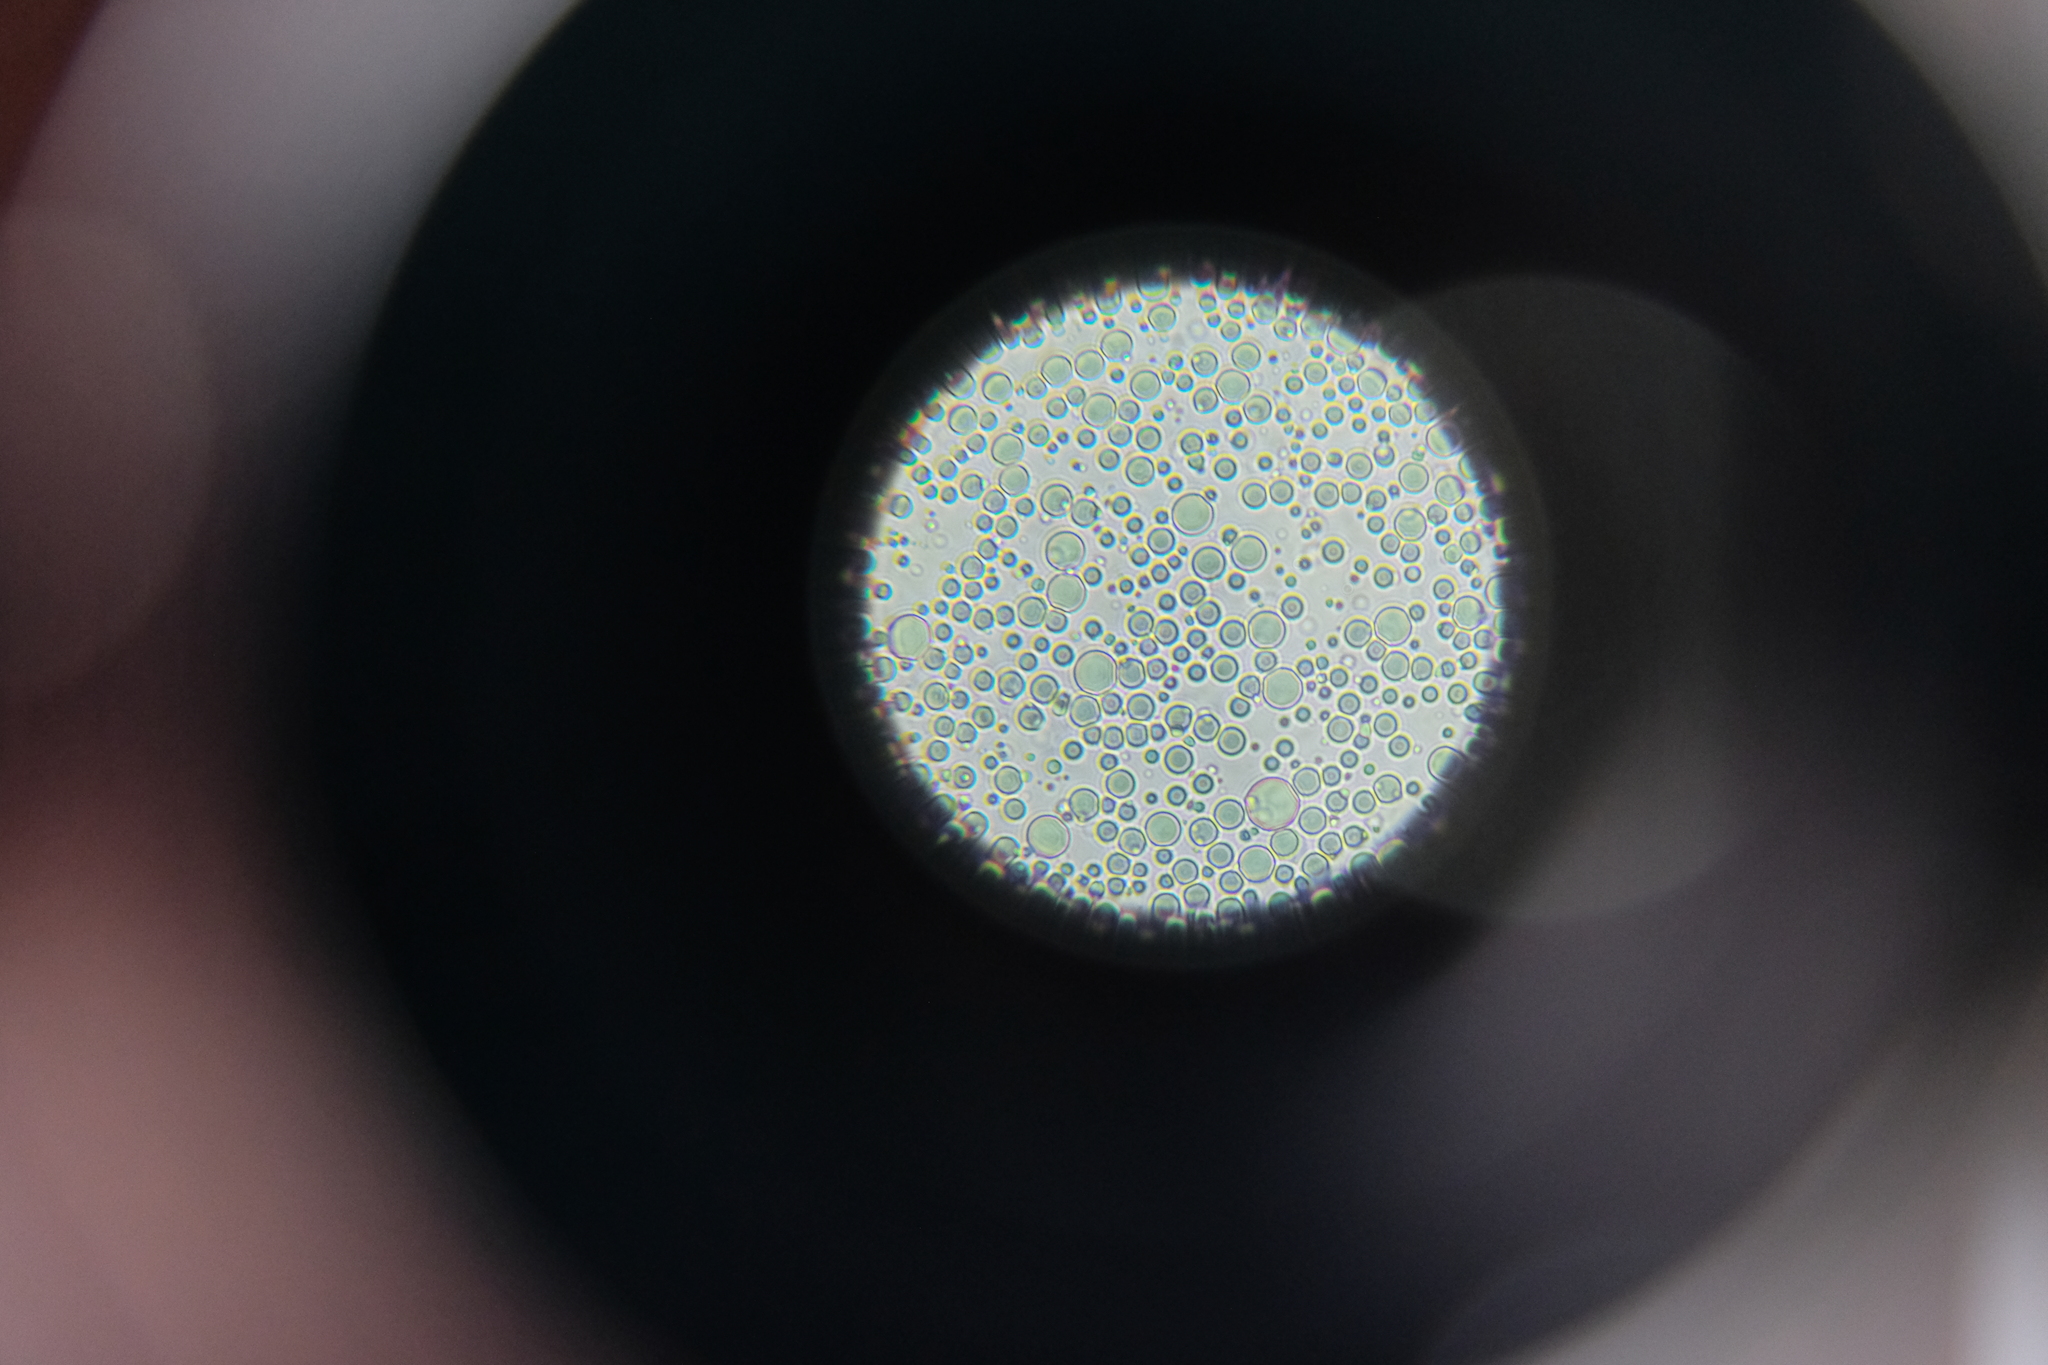 Milk globules under microscope.